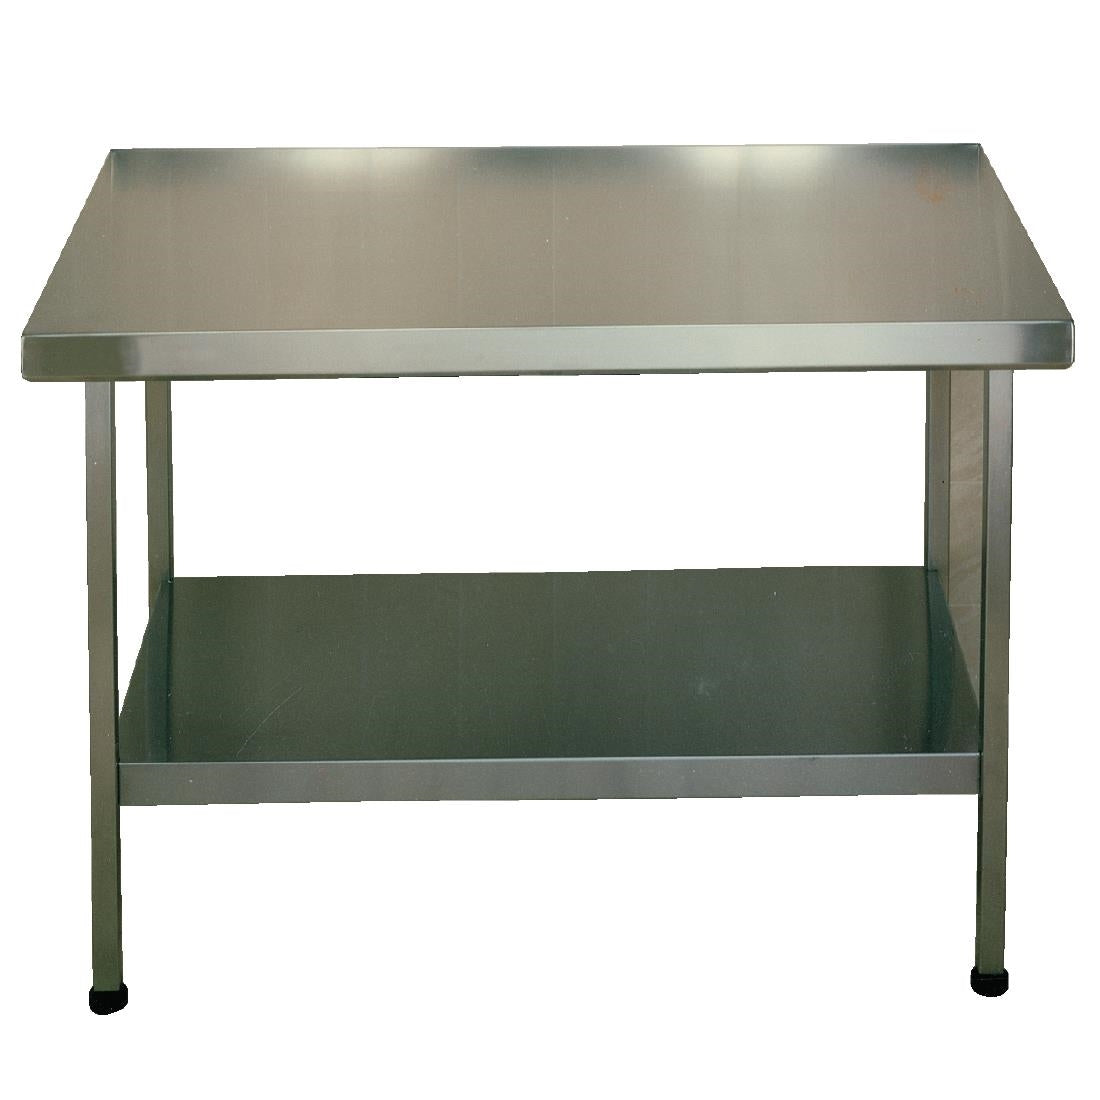 Franke Sissons Stainless Steel Centre Table 1500x650mm JD Catering Equipment Solutions Ltd